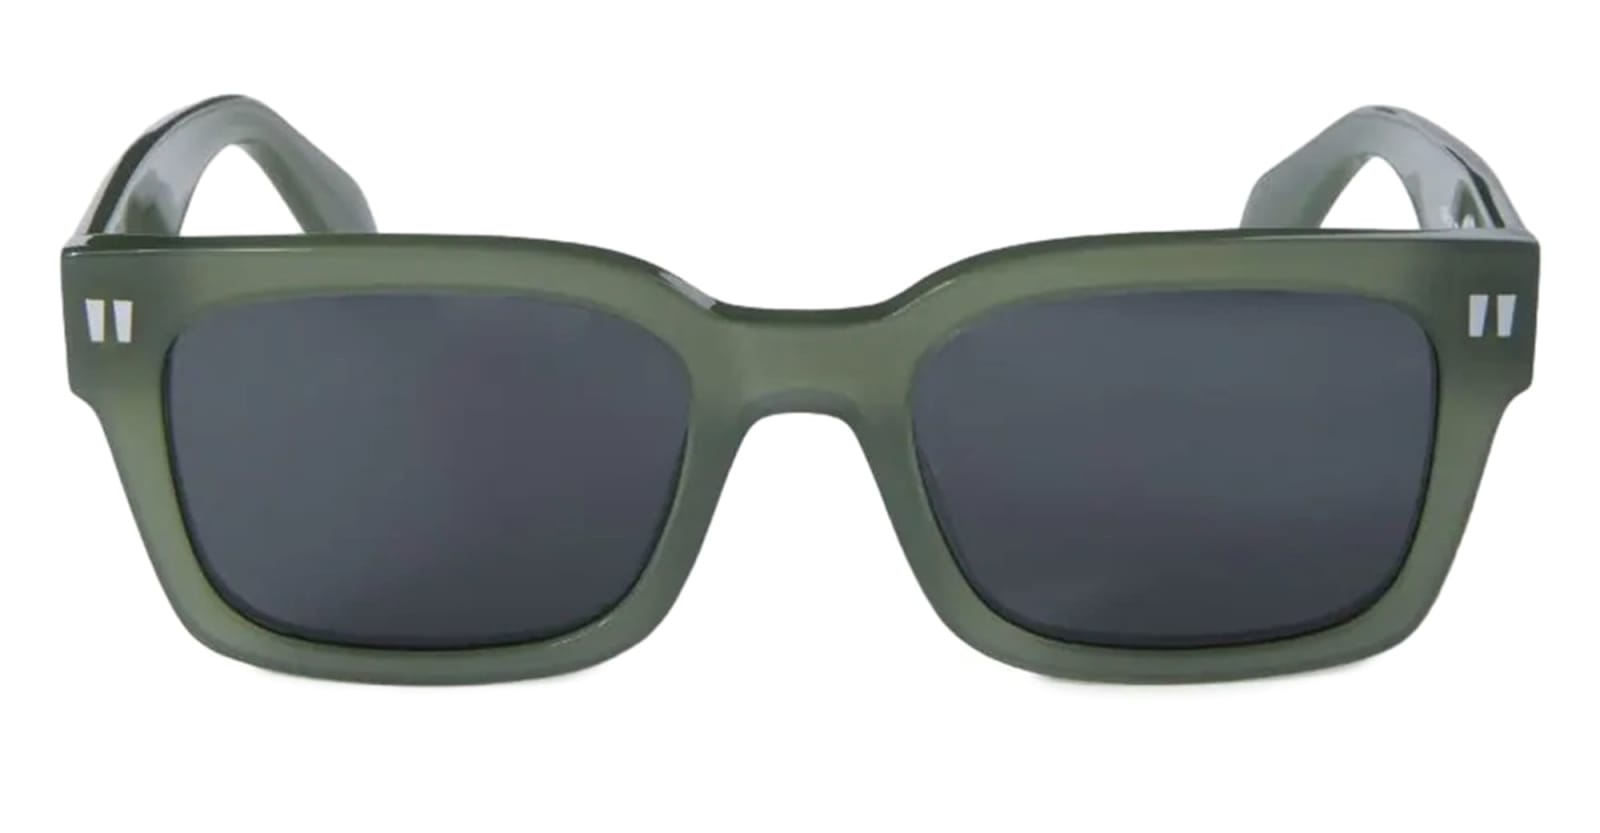 Off-white Midland - Olive Green / Dark Grey Sunglasses